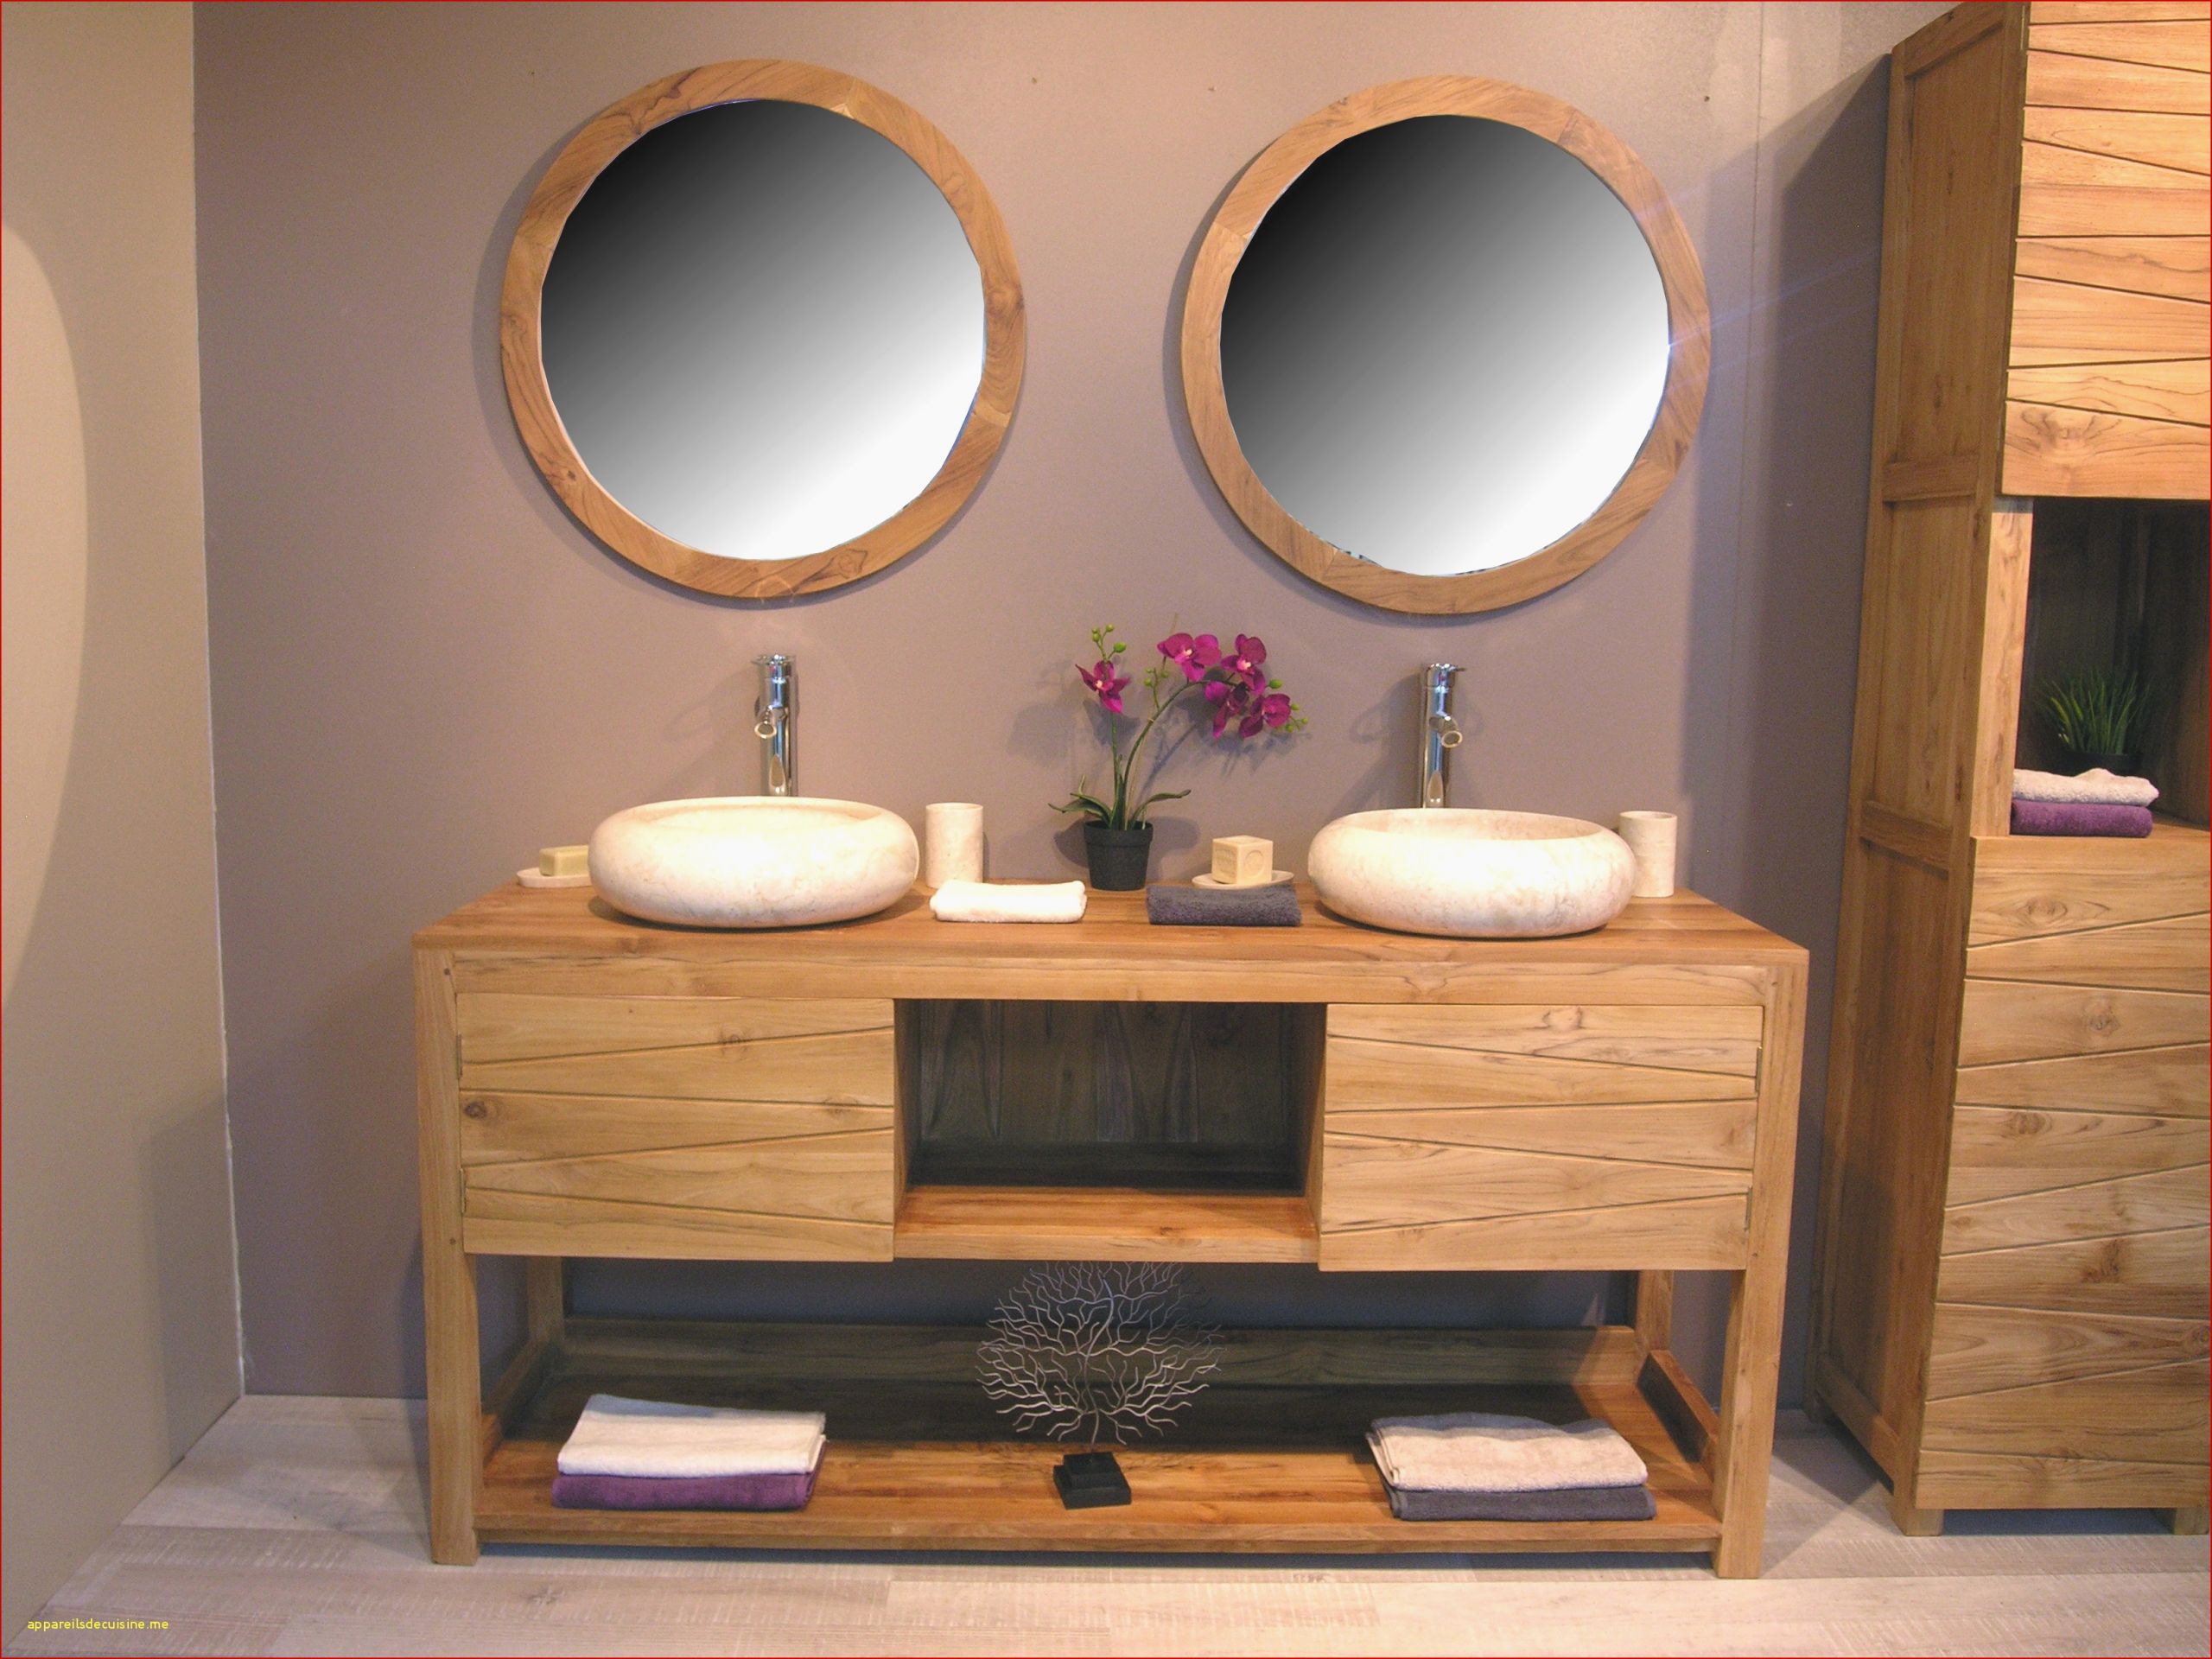 salle de bain en teck genial meuble en bois exotique beau lit moderne elegant meuble bois of salle de bain en teck